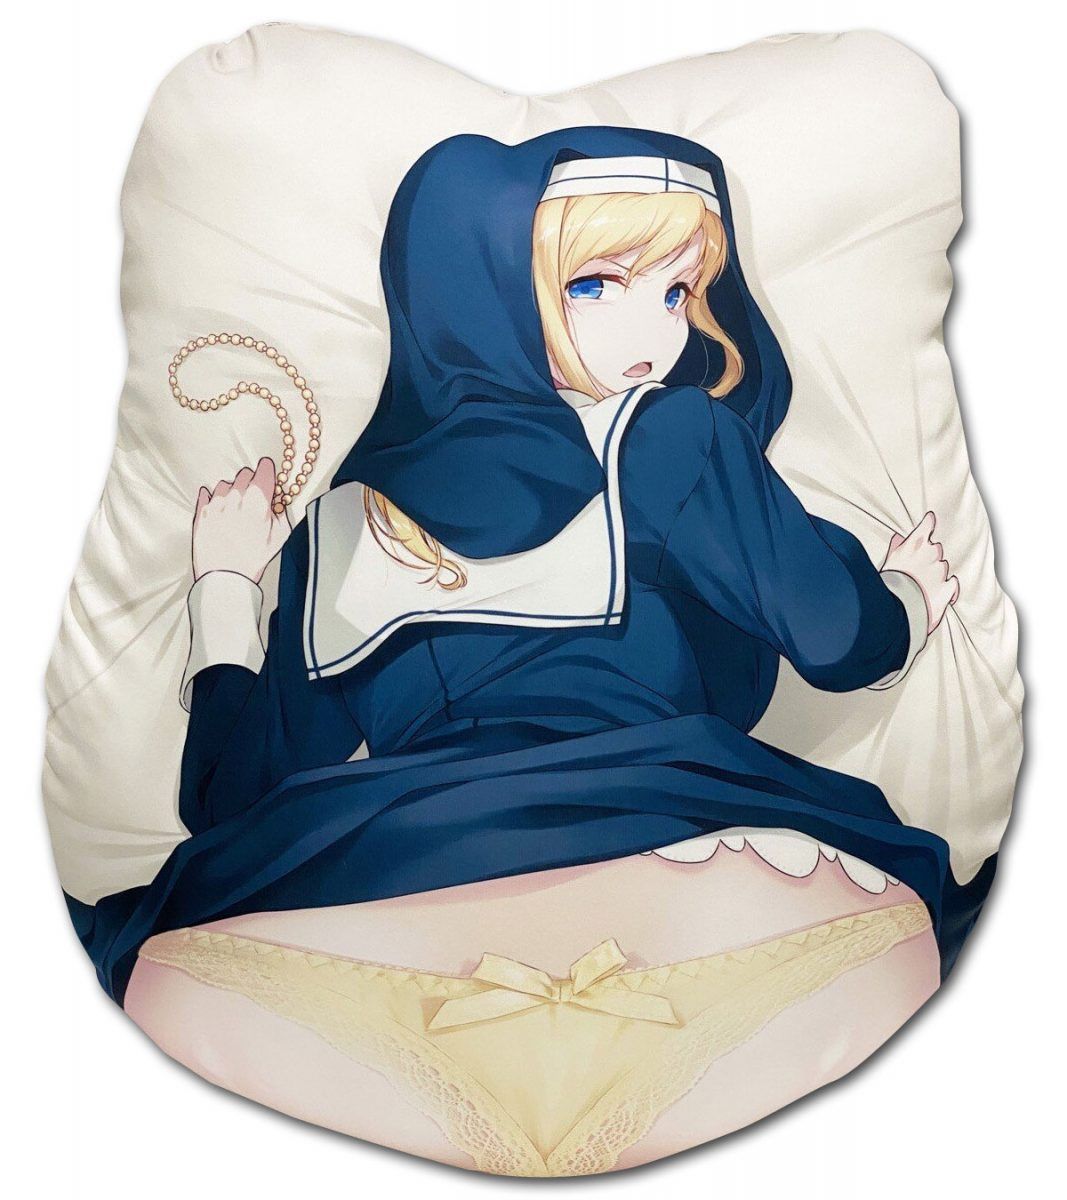 Maria Takayama Life Sized Cushion Is Also Available